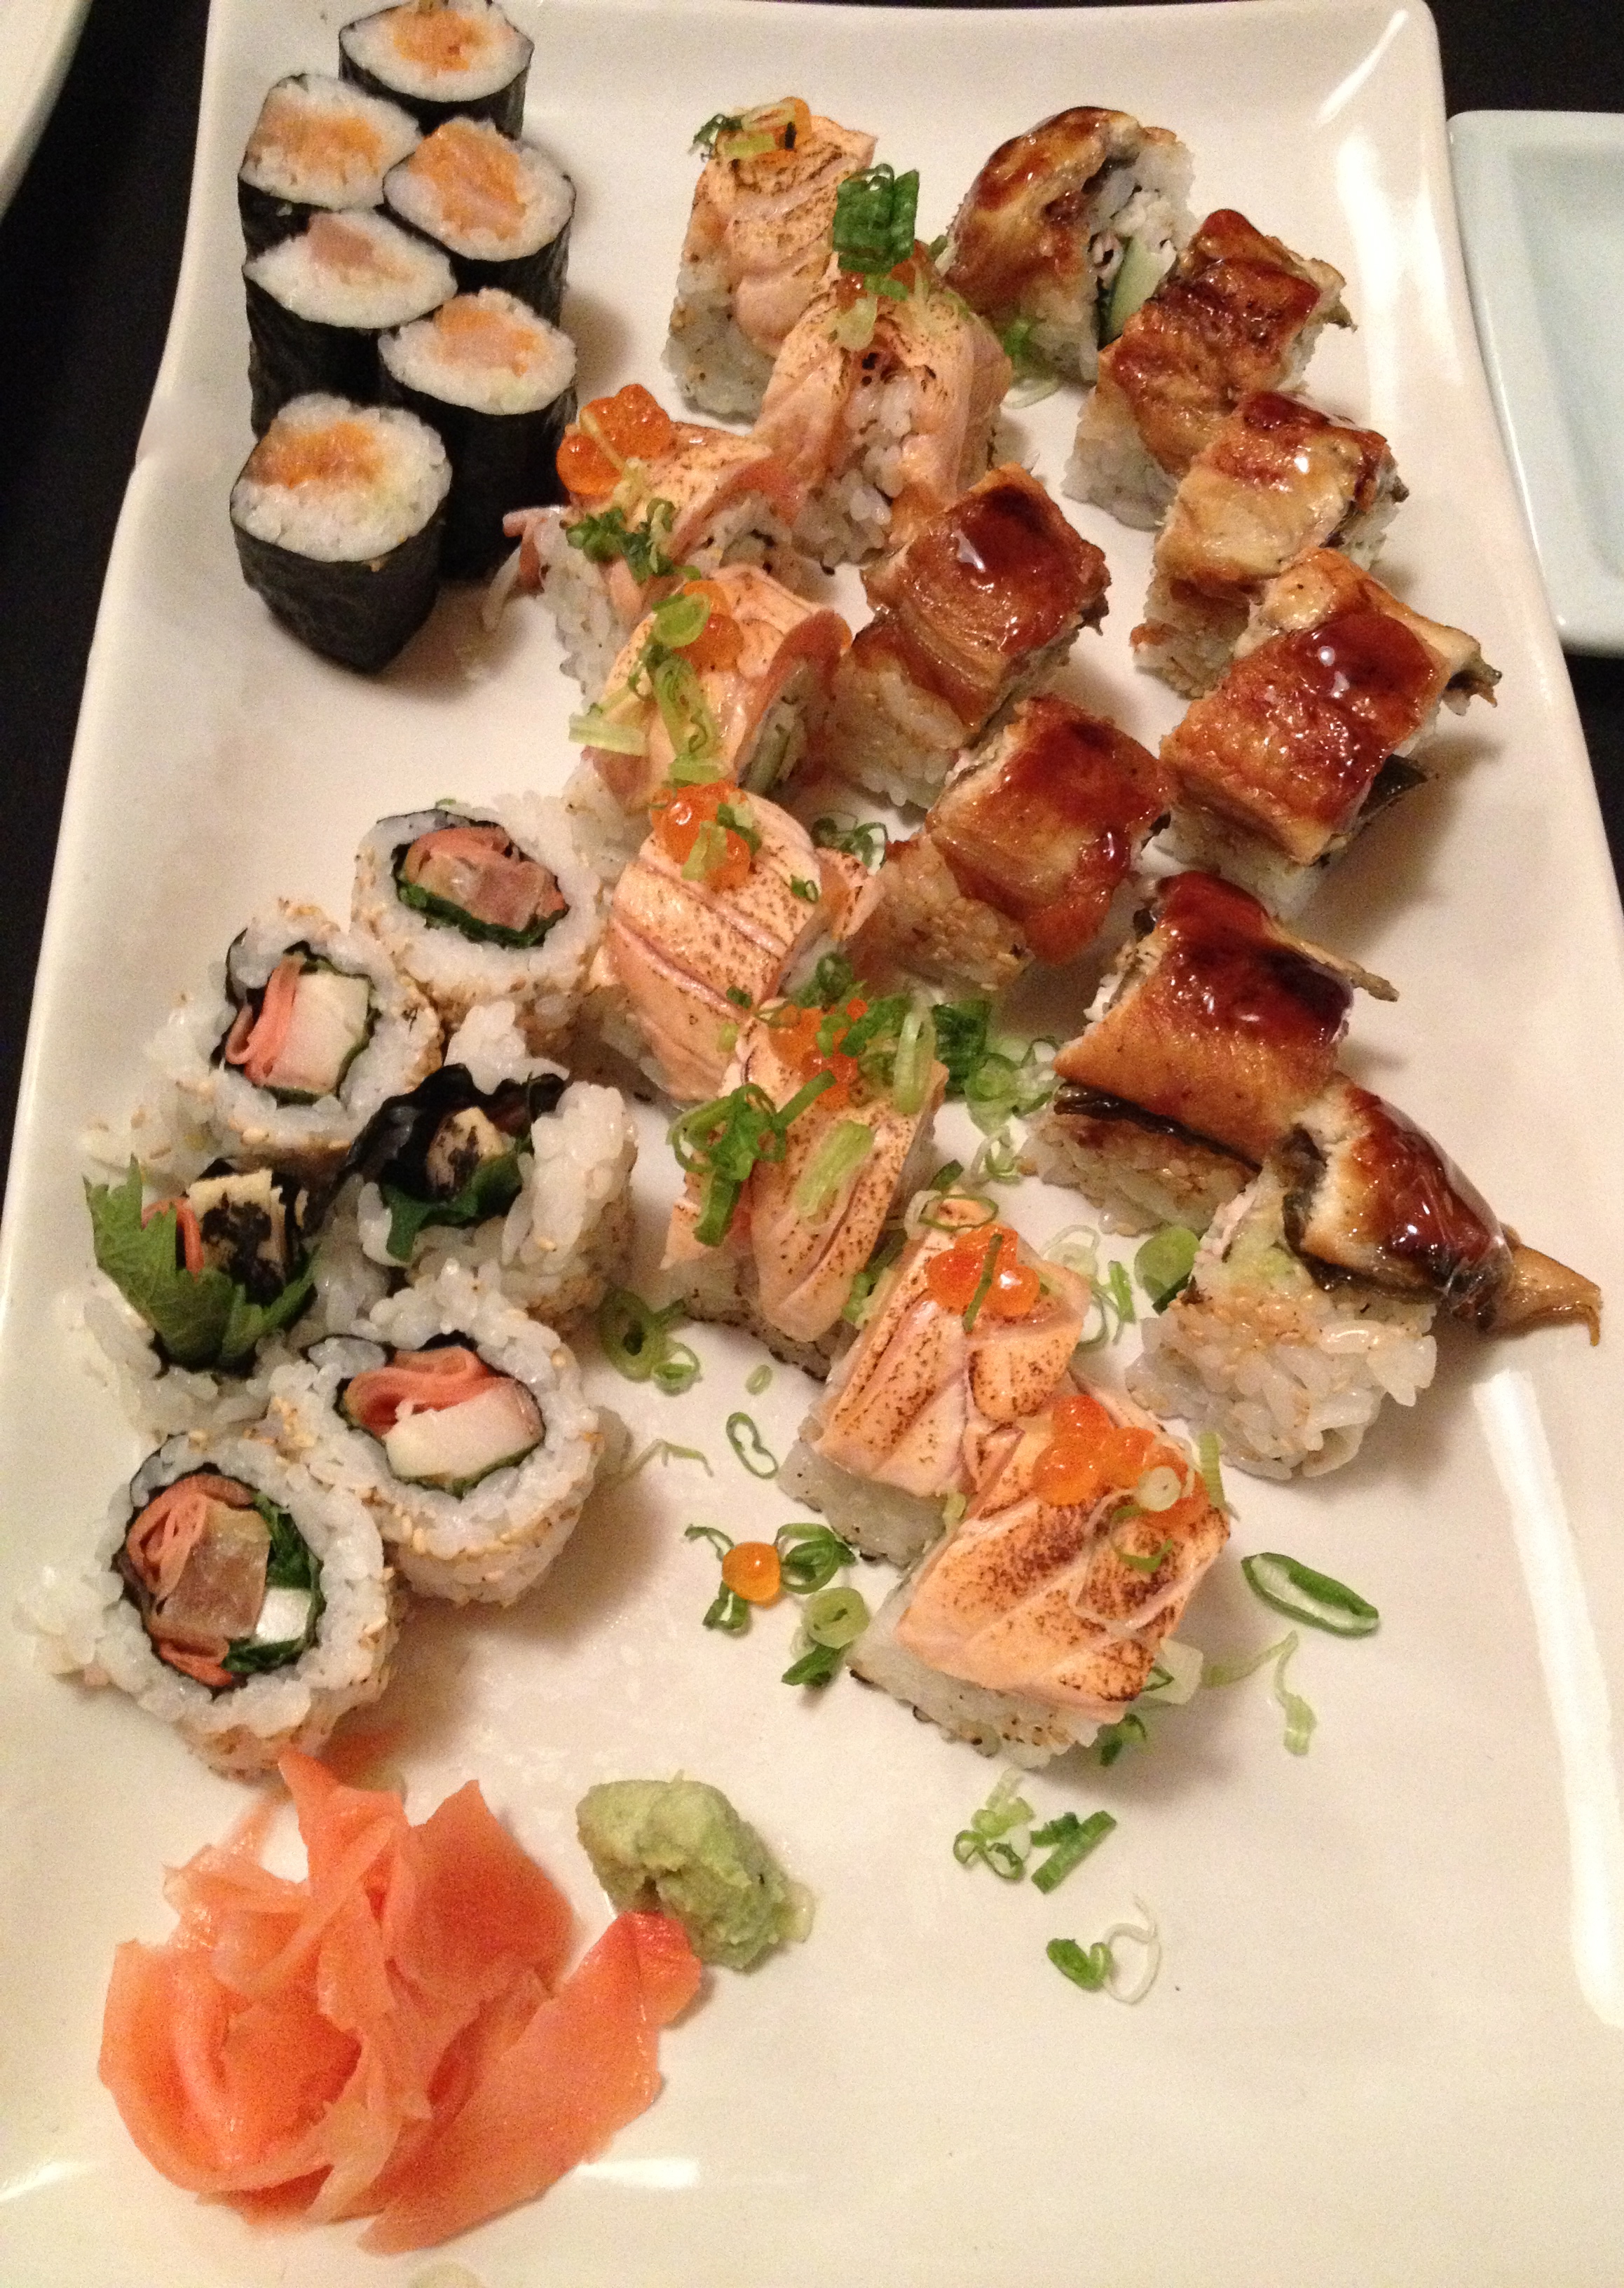 The sushi and sushi rolls at Shiro